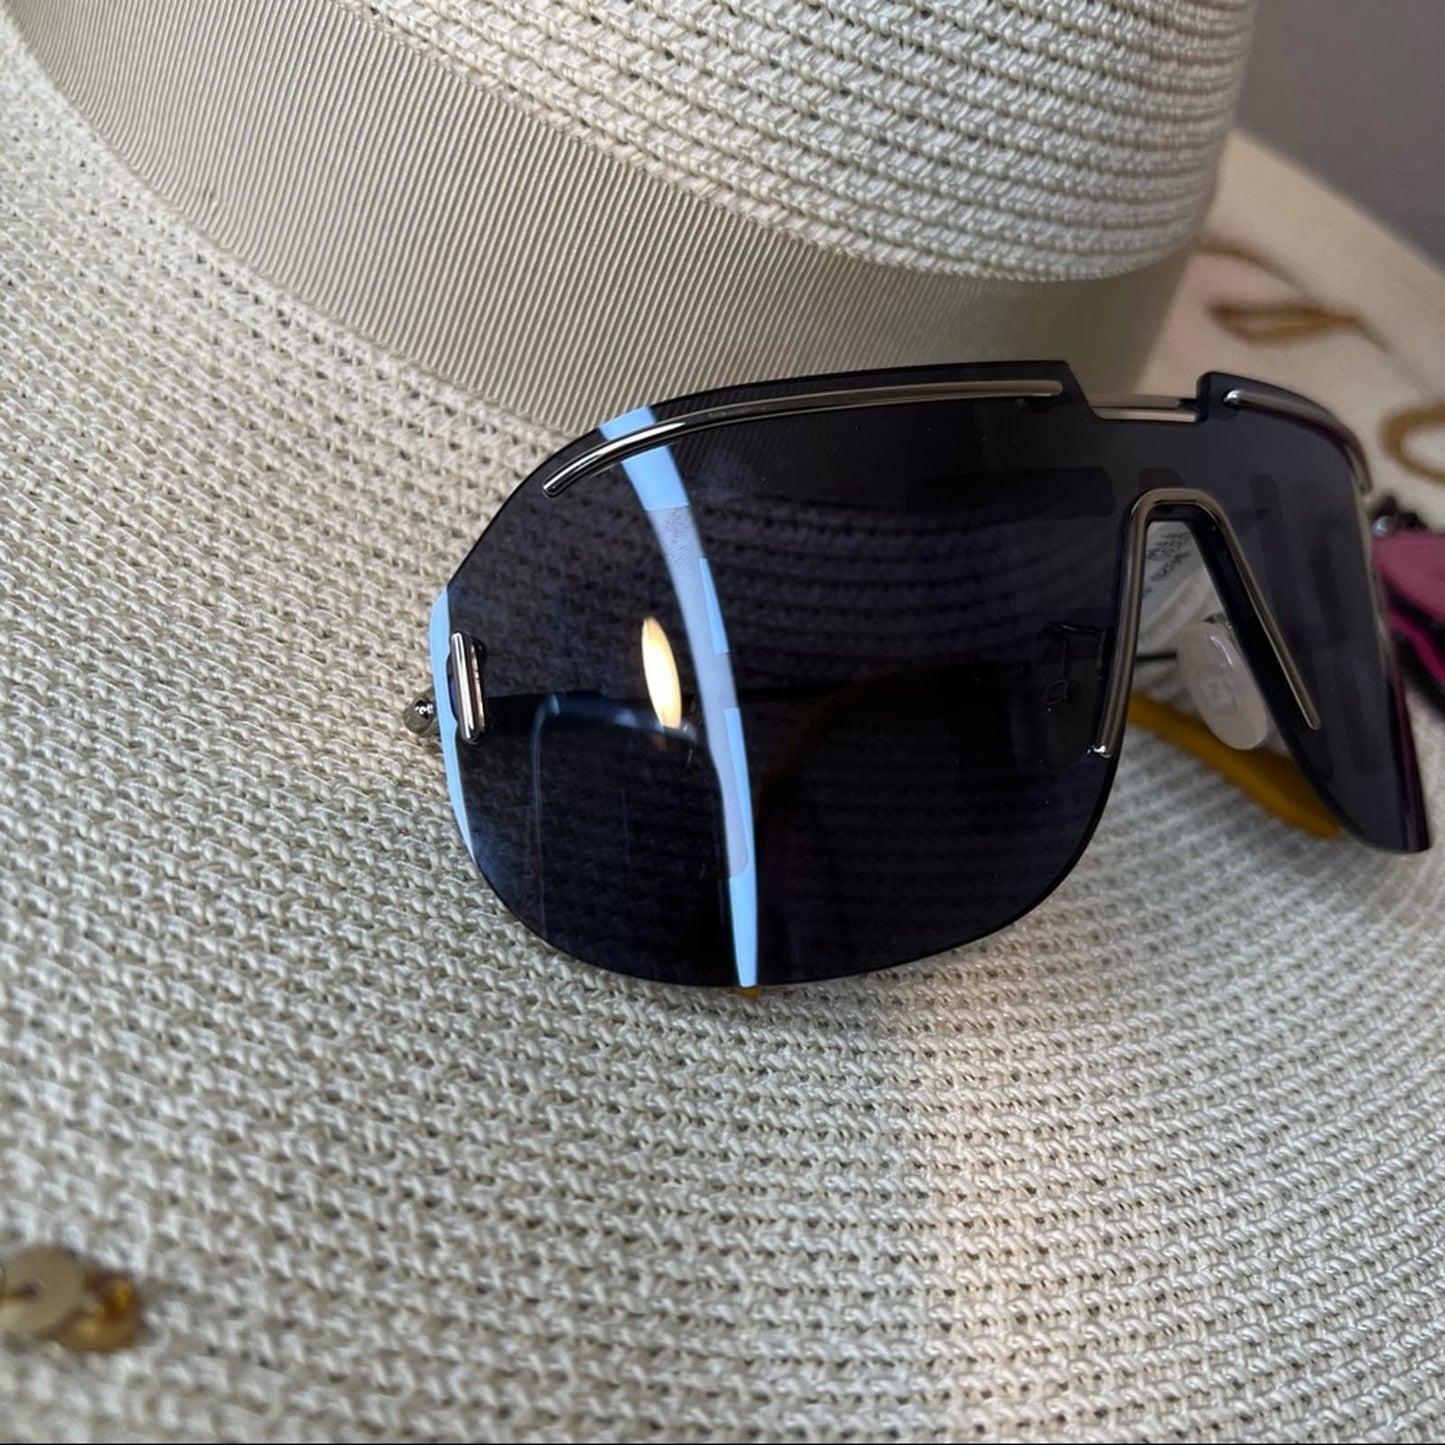 Fendi Large Gray Signature Shield Sunglasses w/ Yellow Details, “FFM0098/S”